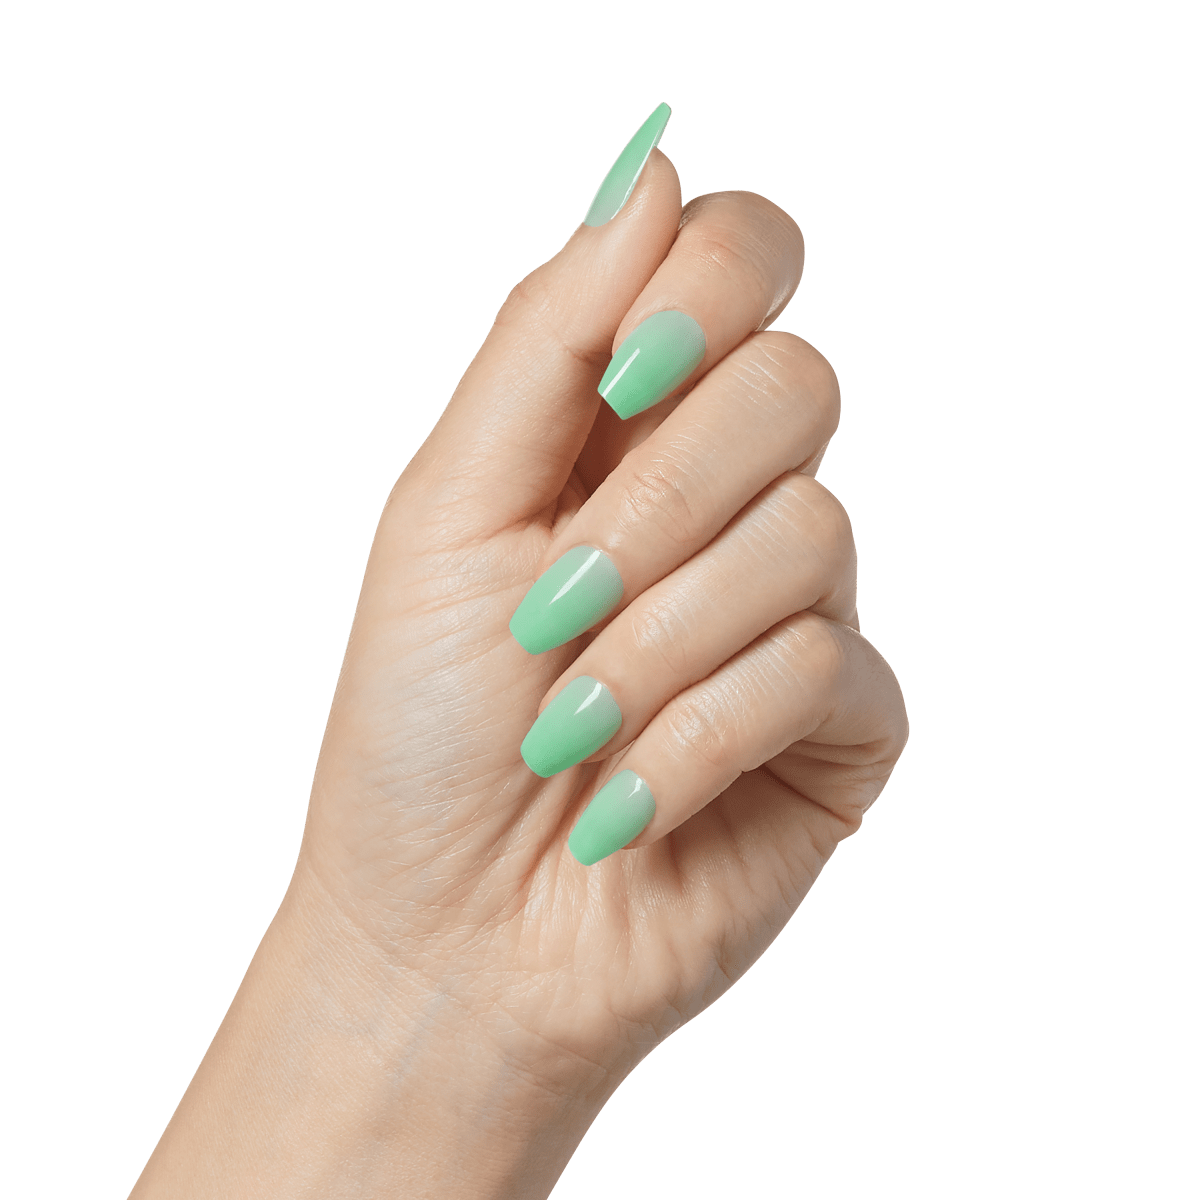 imPRESS Press-On Nails, No Glue Needed, Green, Short Length, Square Shape,  33 Ct. – KISS USA